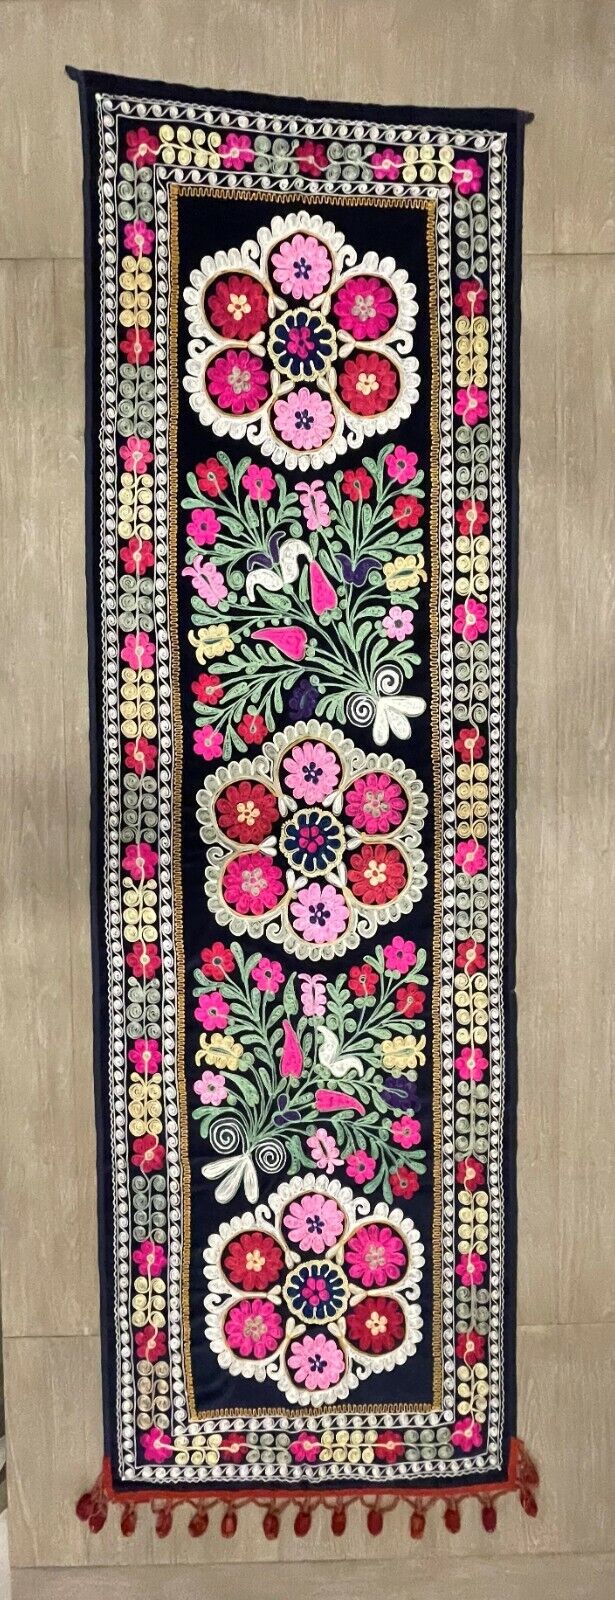  Suzani Wall/Furniture Decor. Vintage Uzbek Handmade Embroidery 85x25in.